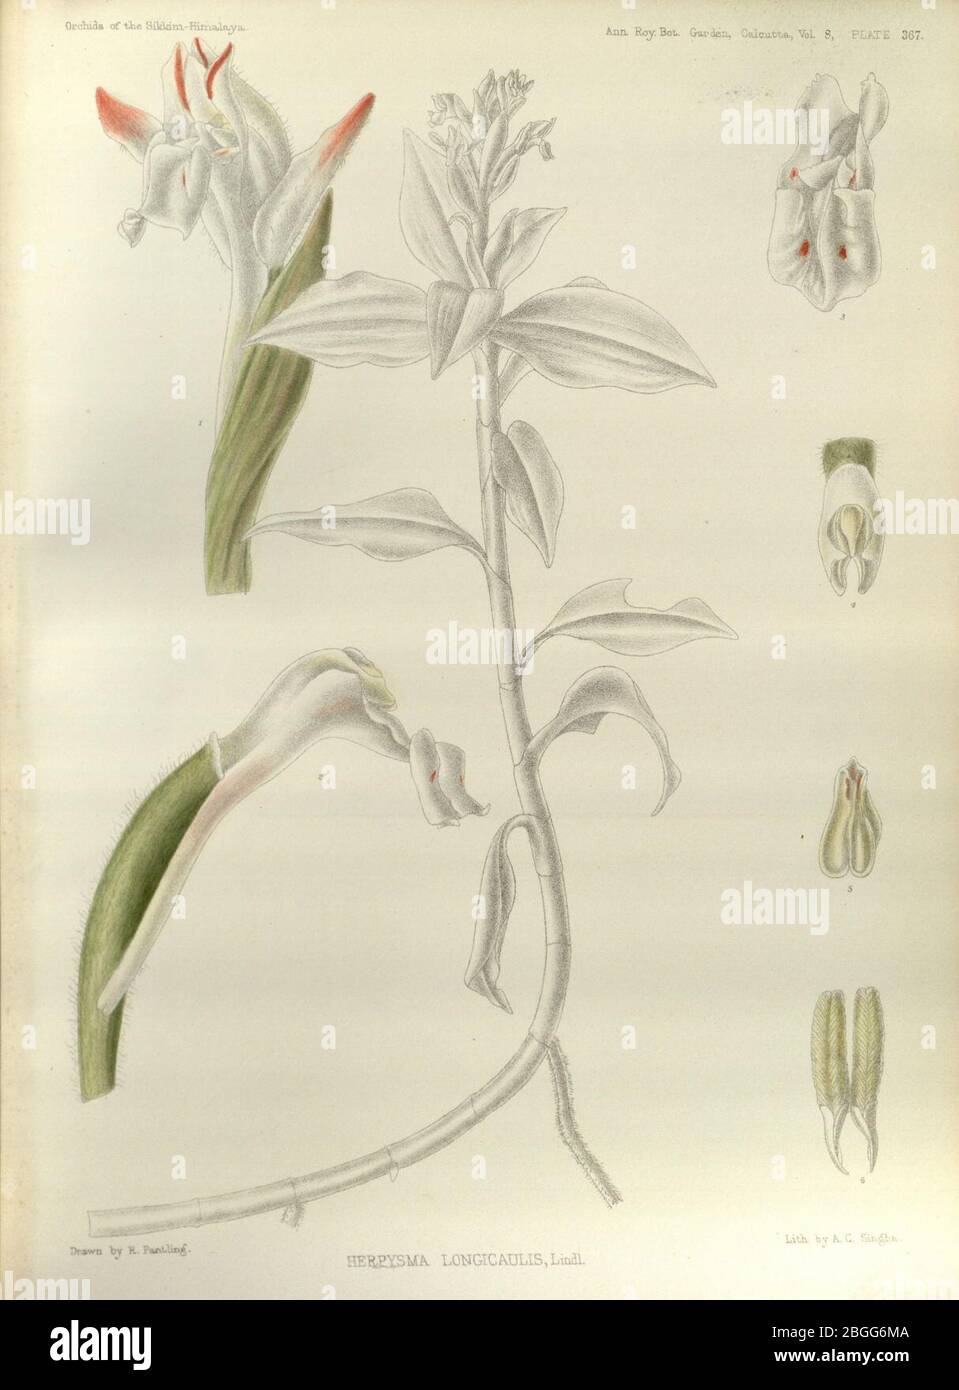 Herpysma longicaulis - The Orchids of the Sikkim-Himalaya pl 367 (1898). Stock Photo